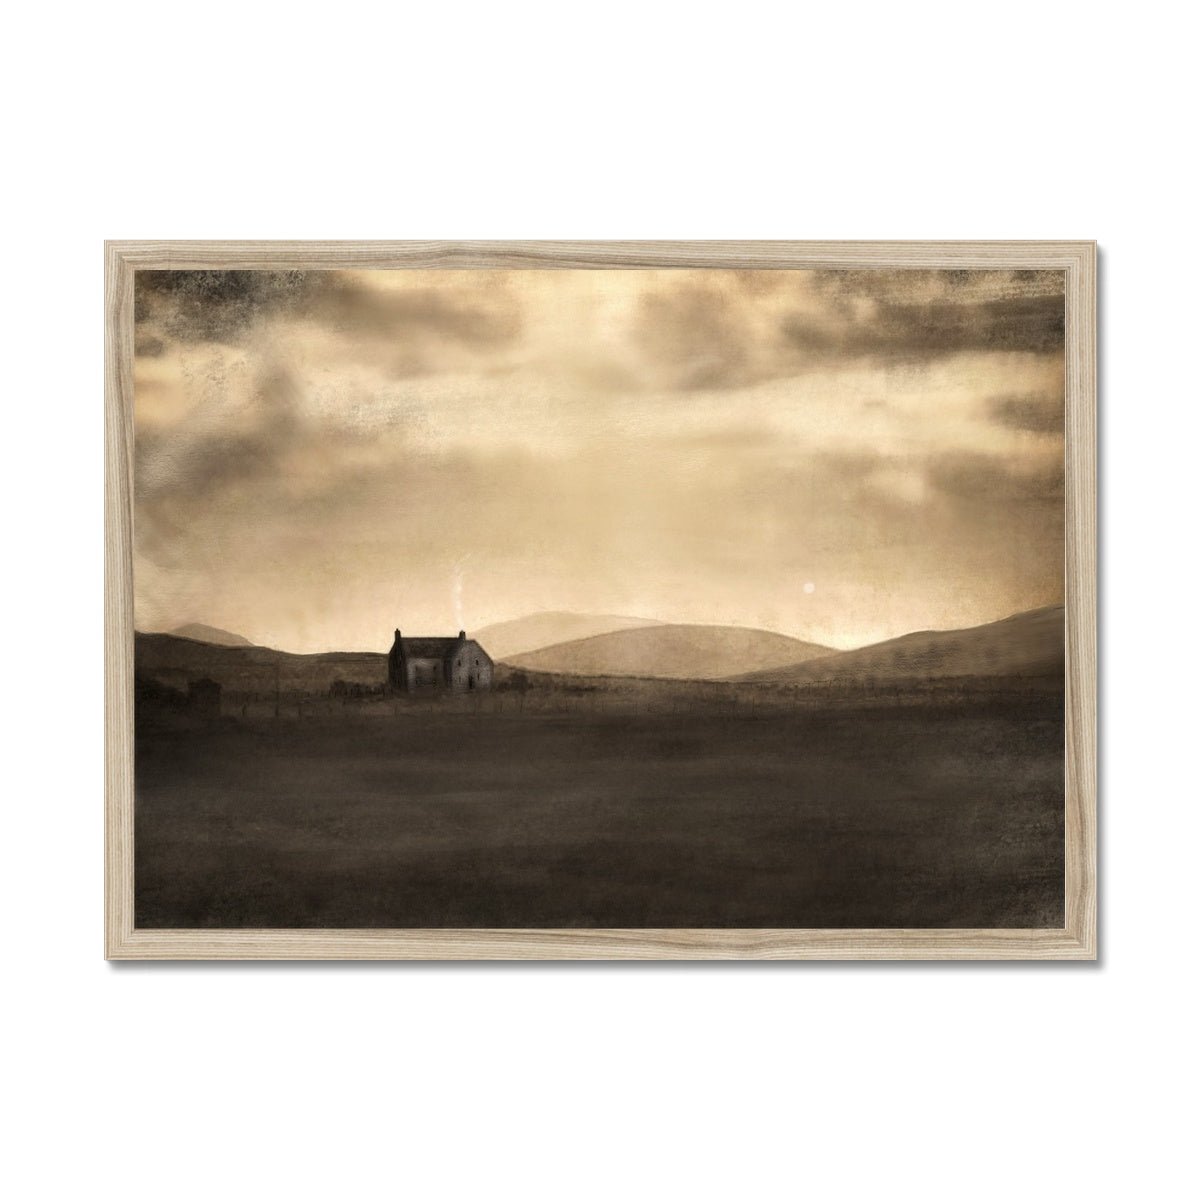 A Moonlit Croft Painting | Framed Prints From Scotland-Framed Prints-Hebridean Islands Art Gallery-A2 Landscape-Natural Frame-Paintings, Prints, Homeware, Art Gifts From Scotland By Scottish Artist Kevin Hunter